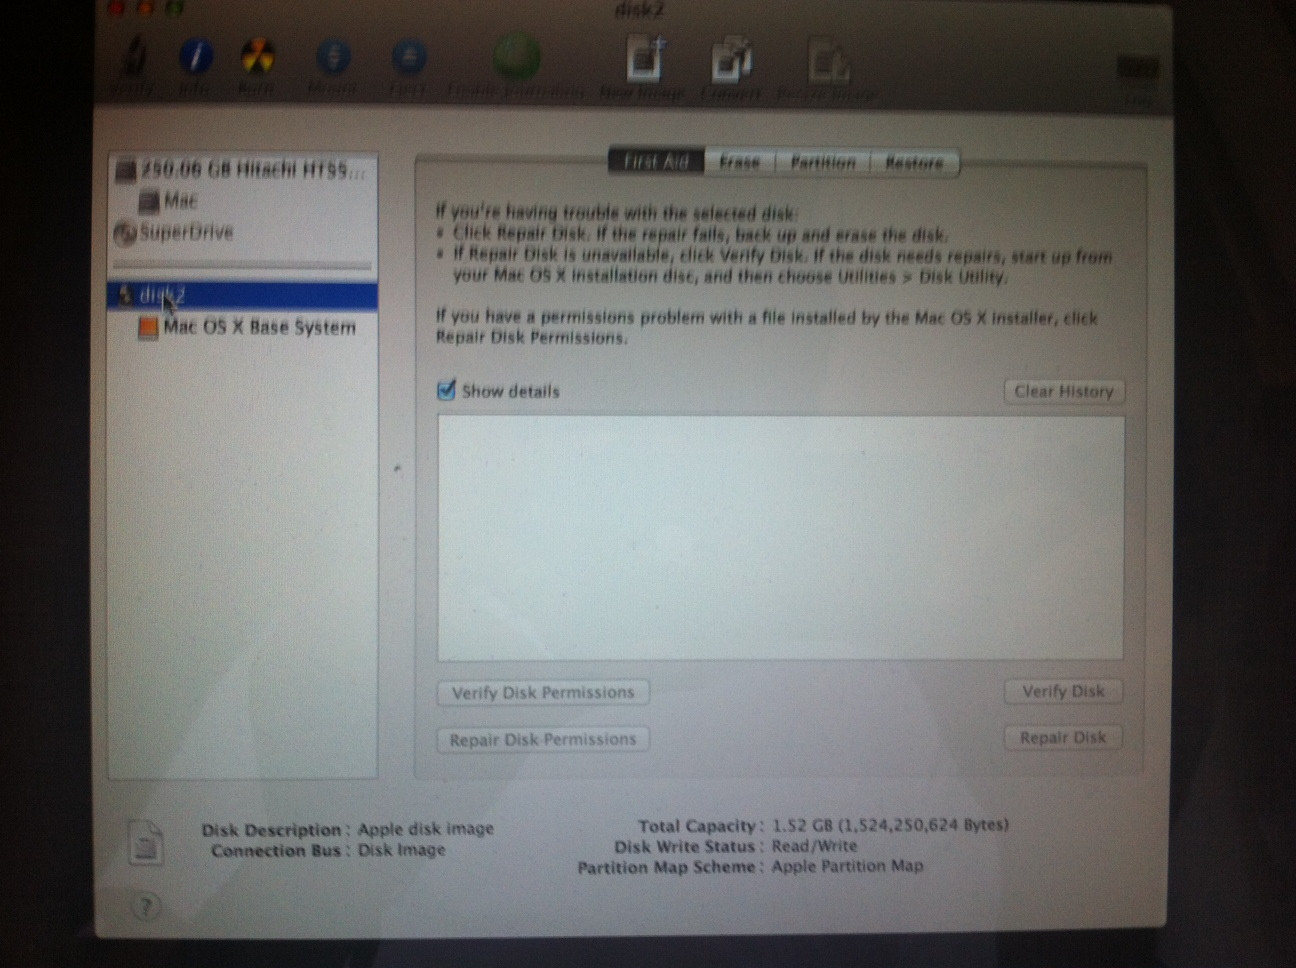 Download Disk Utility Mac Os X